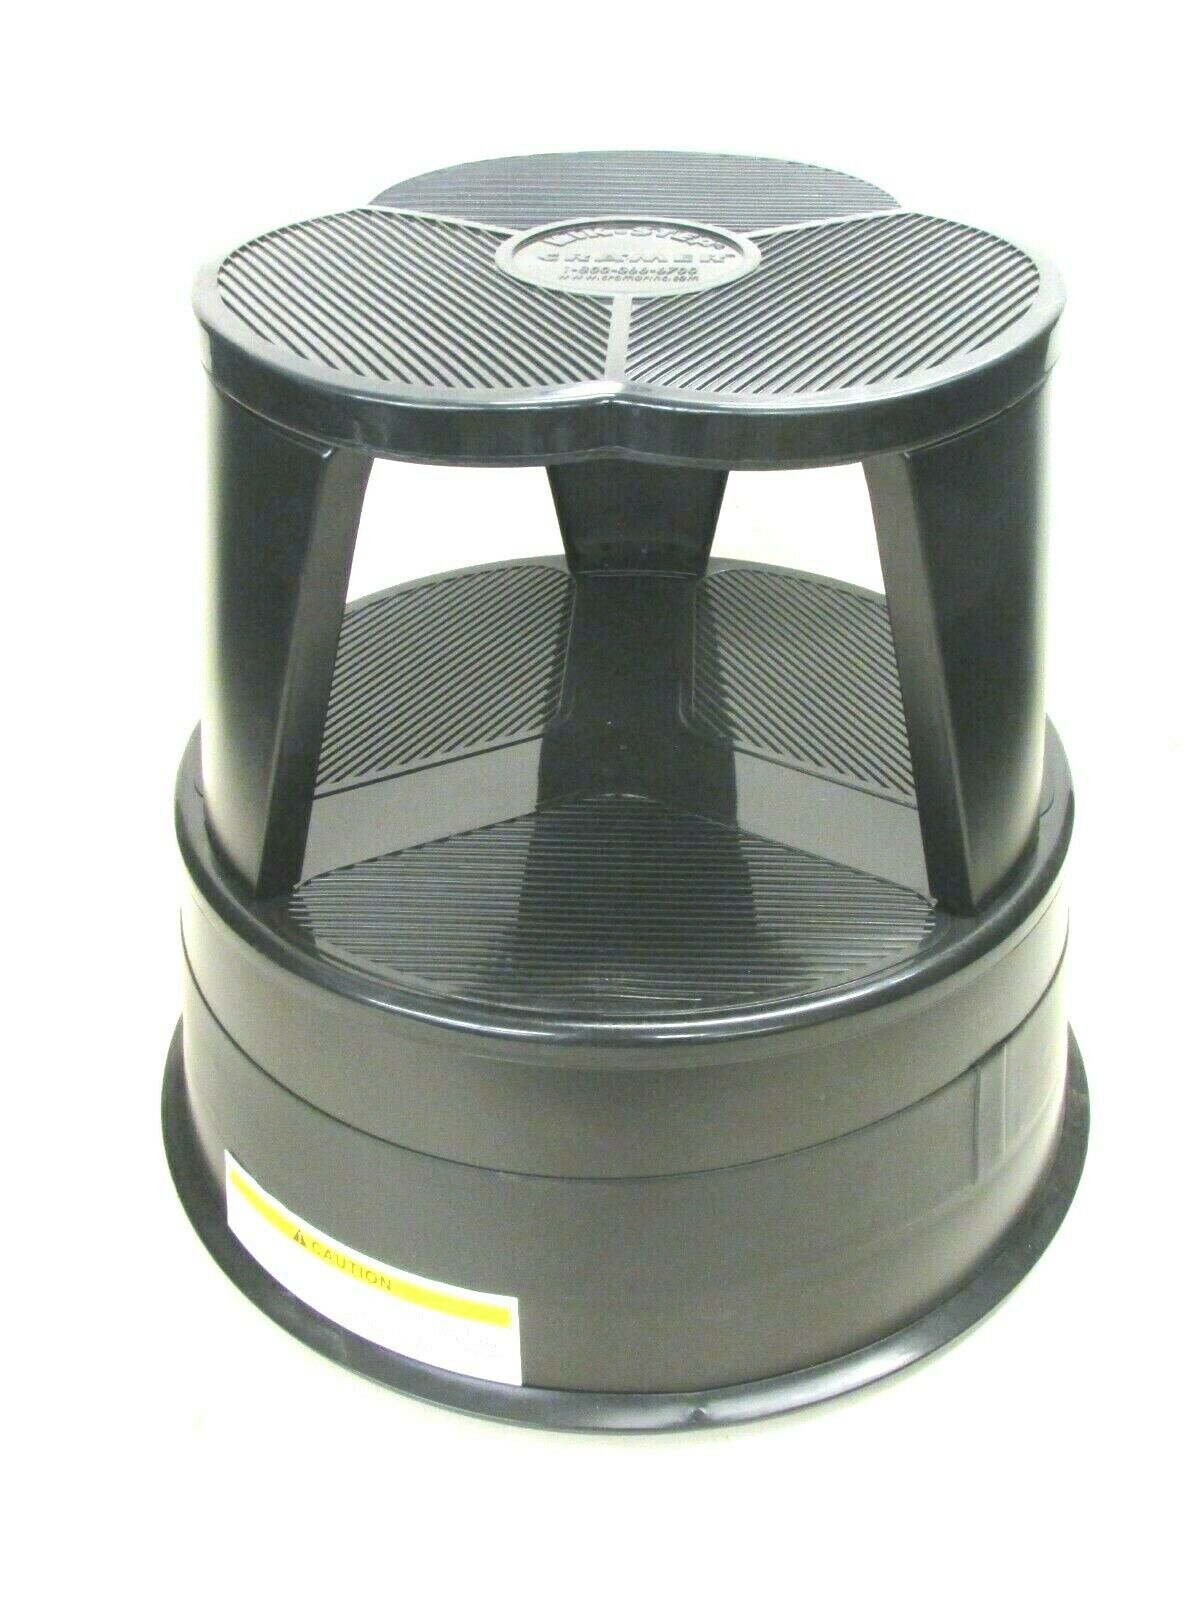 New! Cramer Kik-step Rolling Step Stool, 300-lb. Capacity, Cra-1001-92